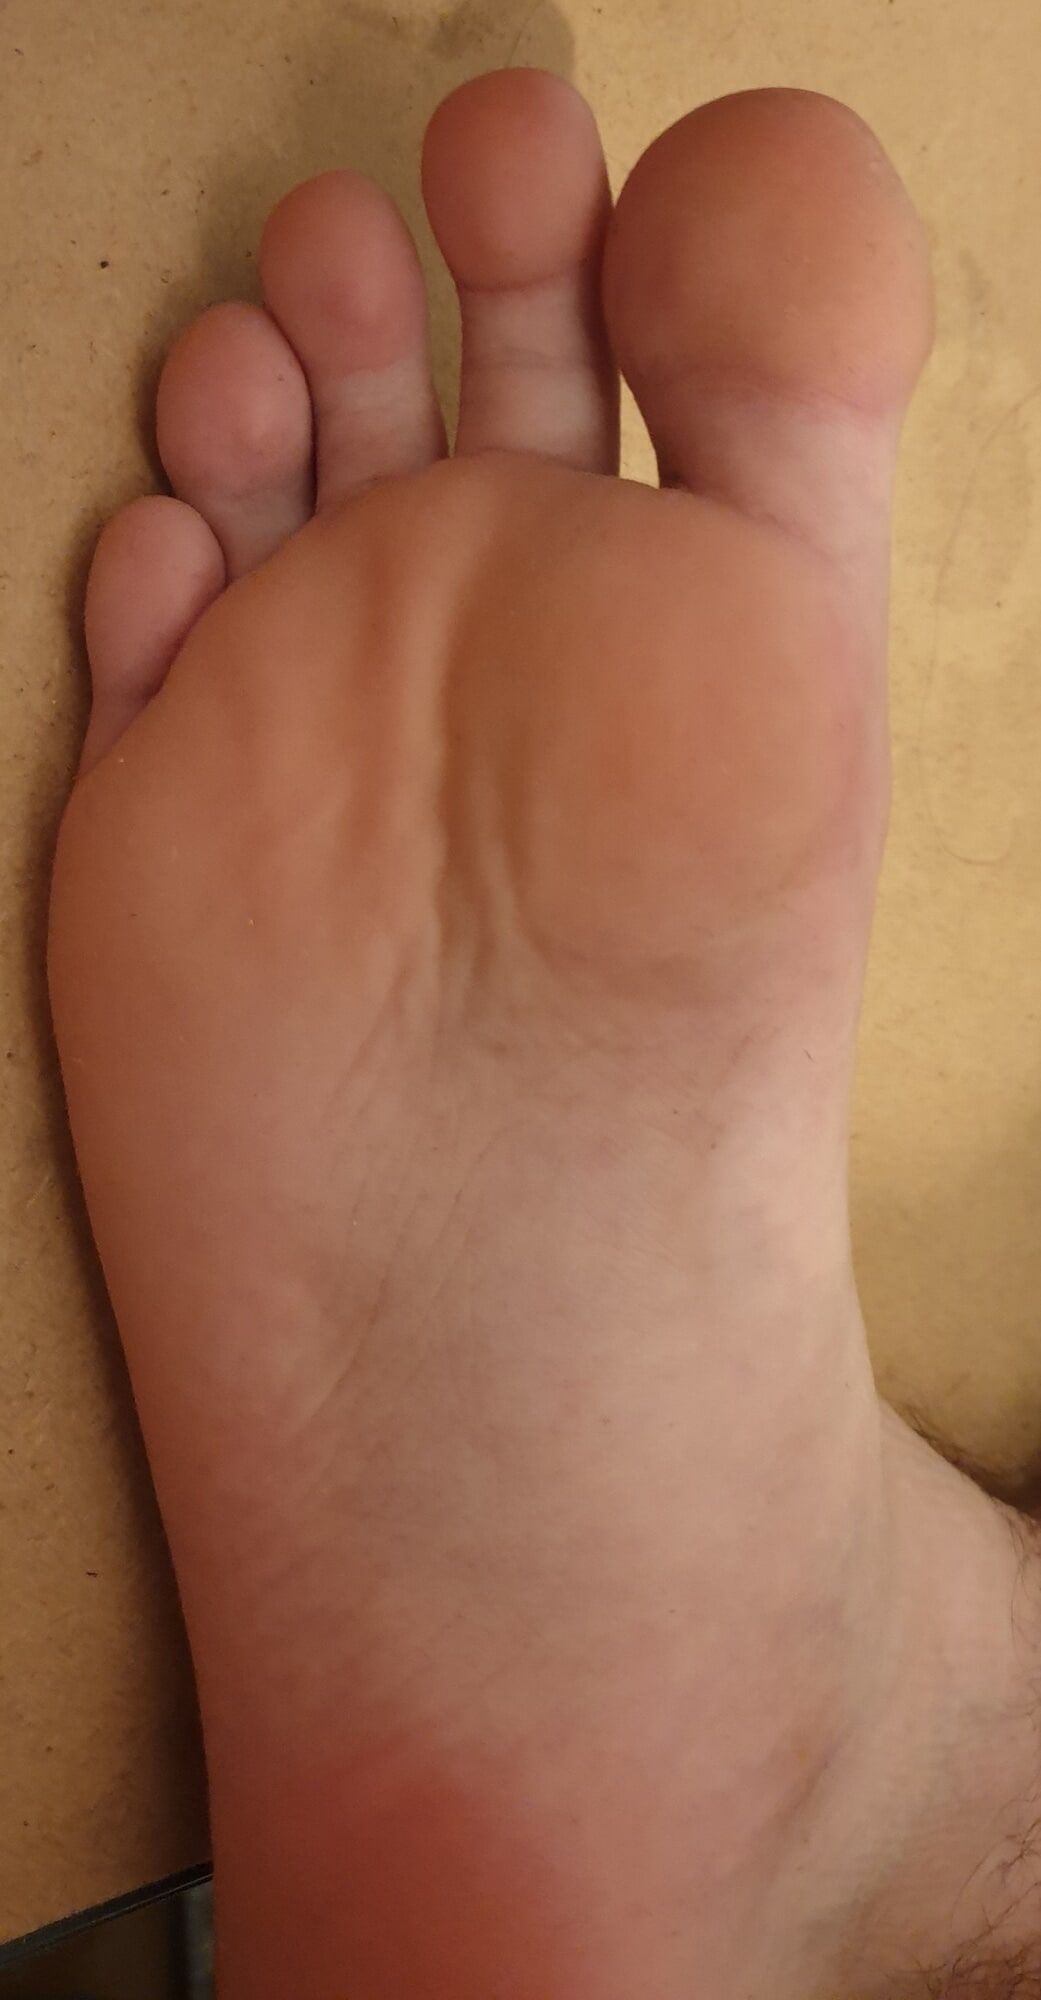 Feet #3